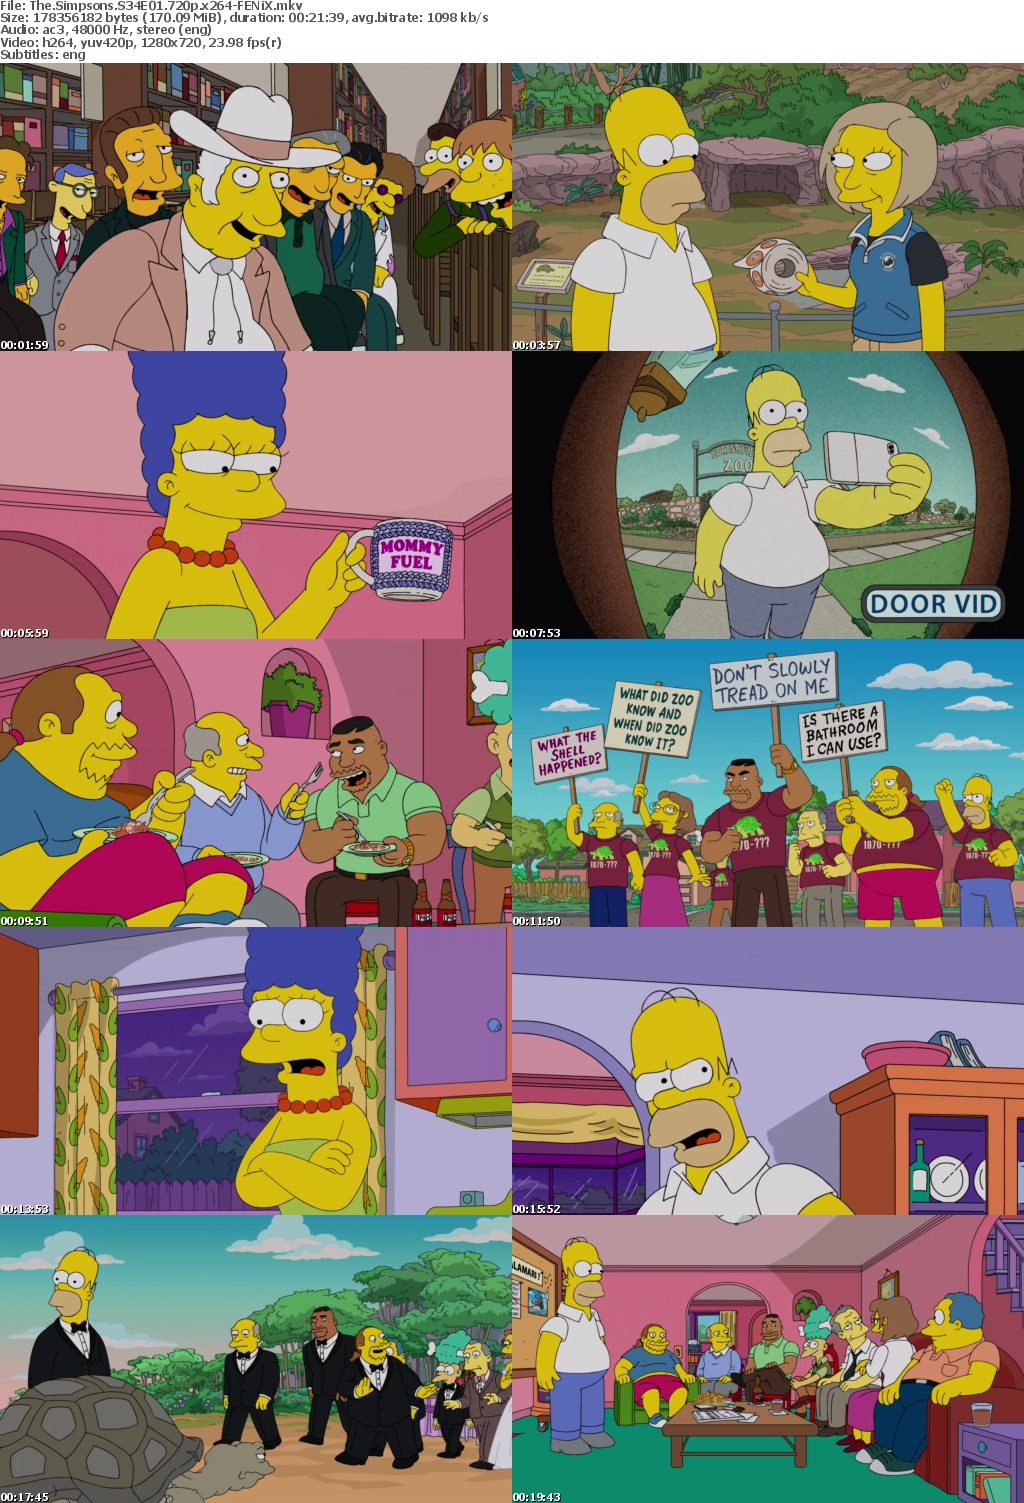 The Simpsons S34E01 720p x264-FENiX